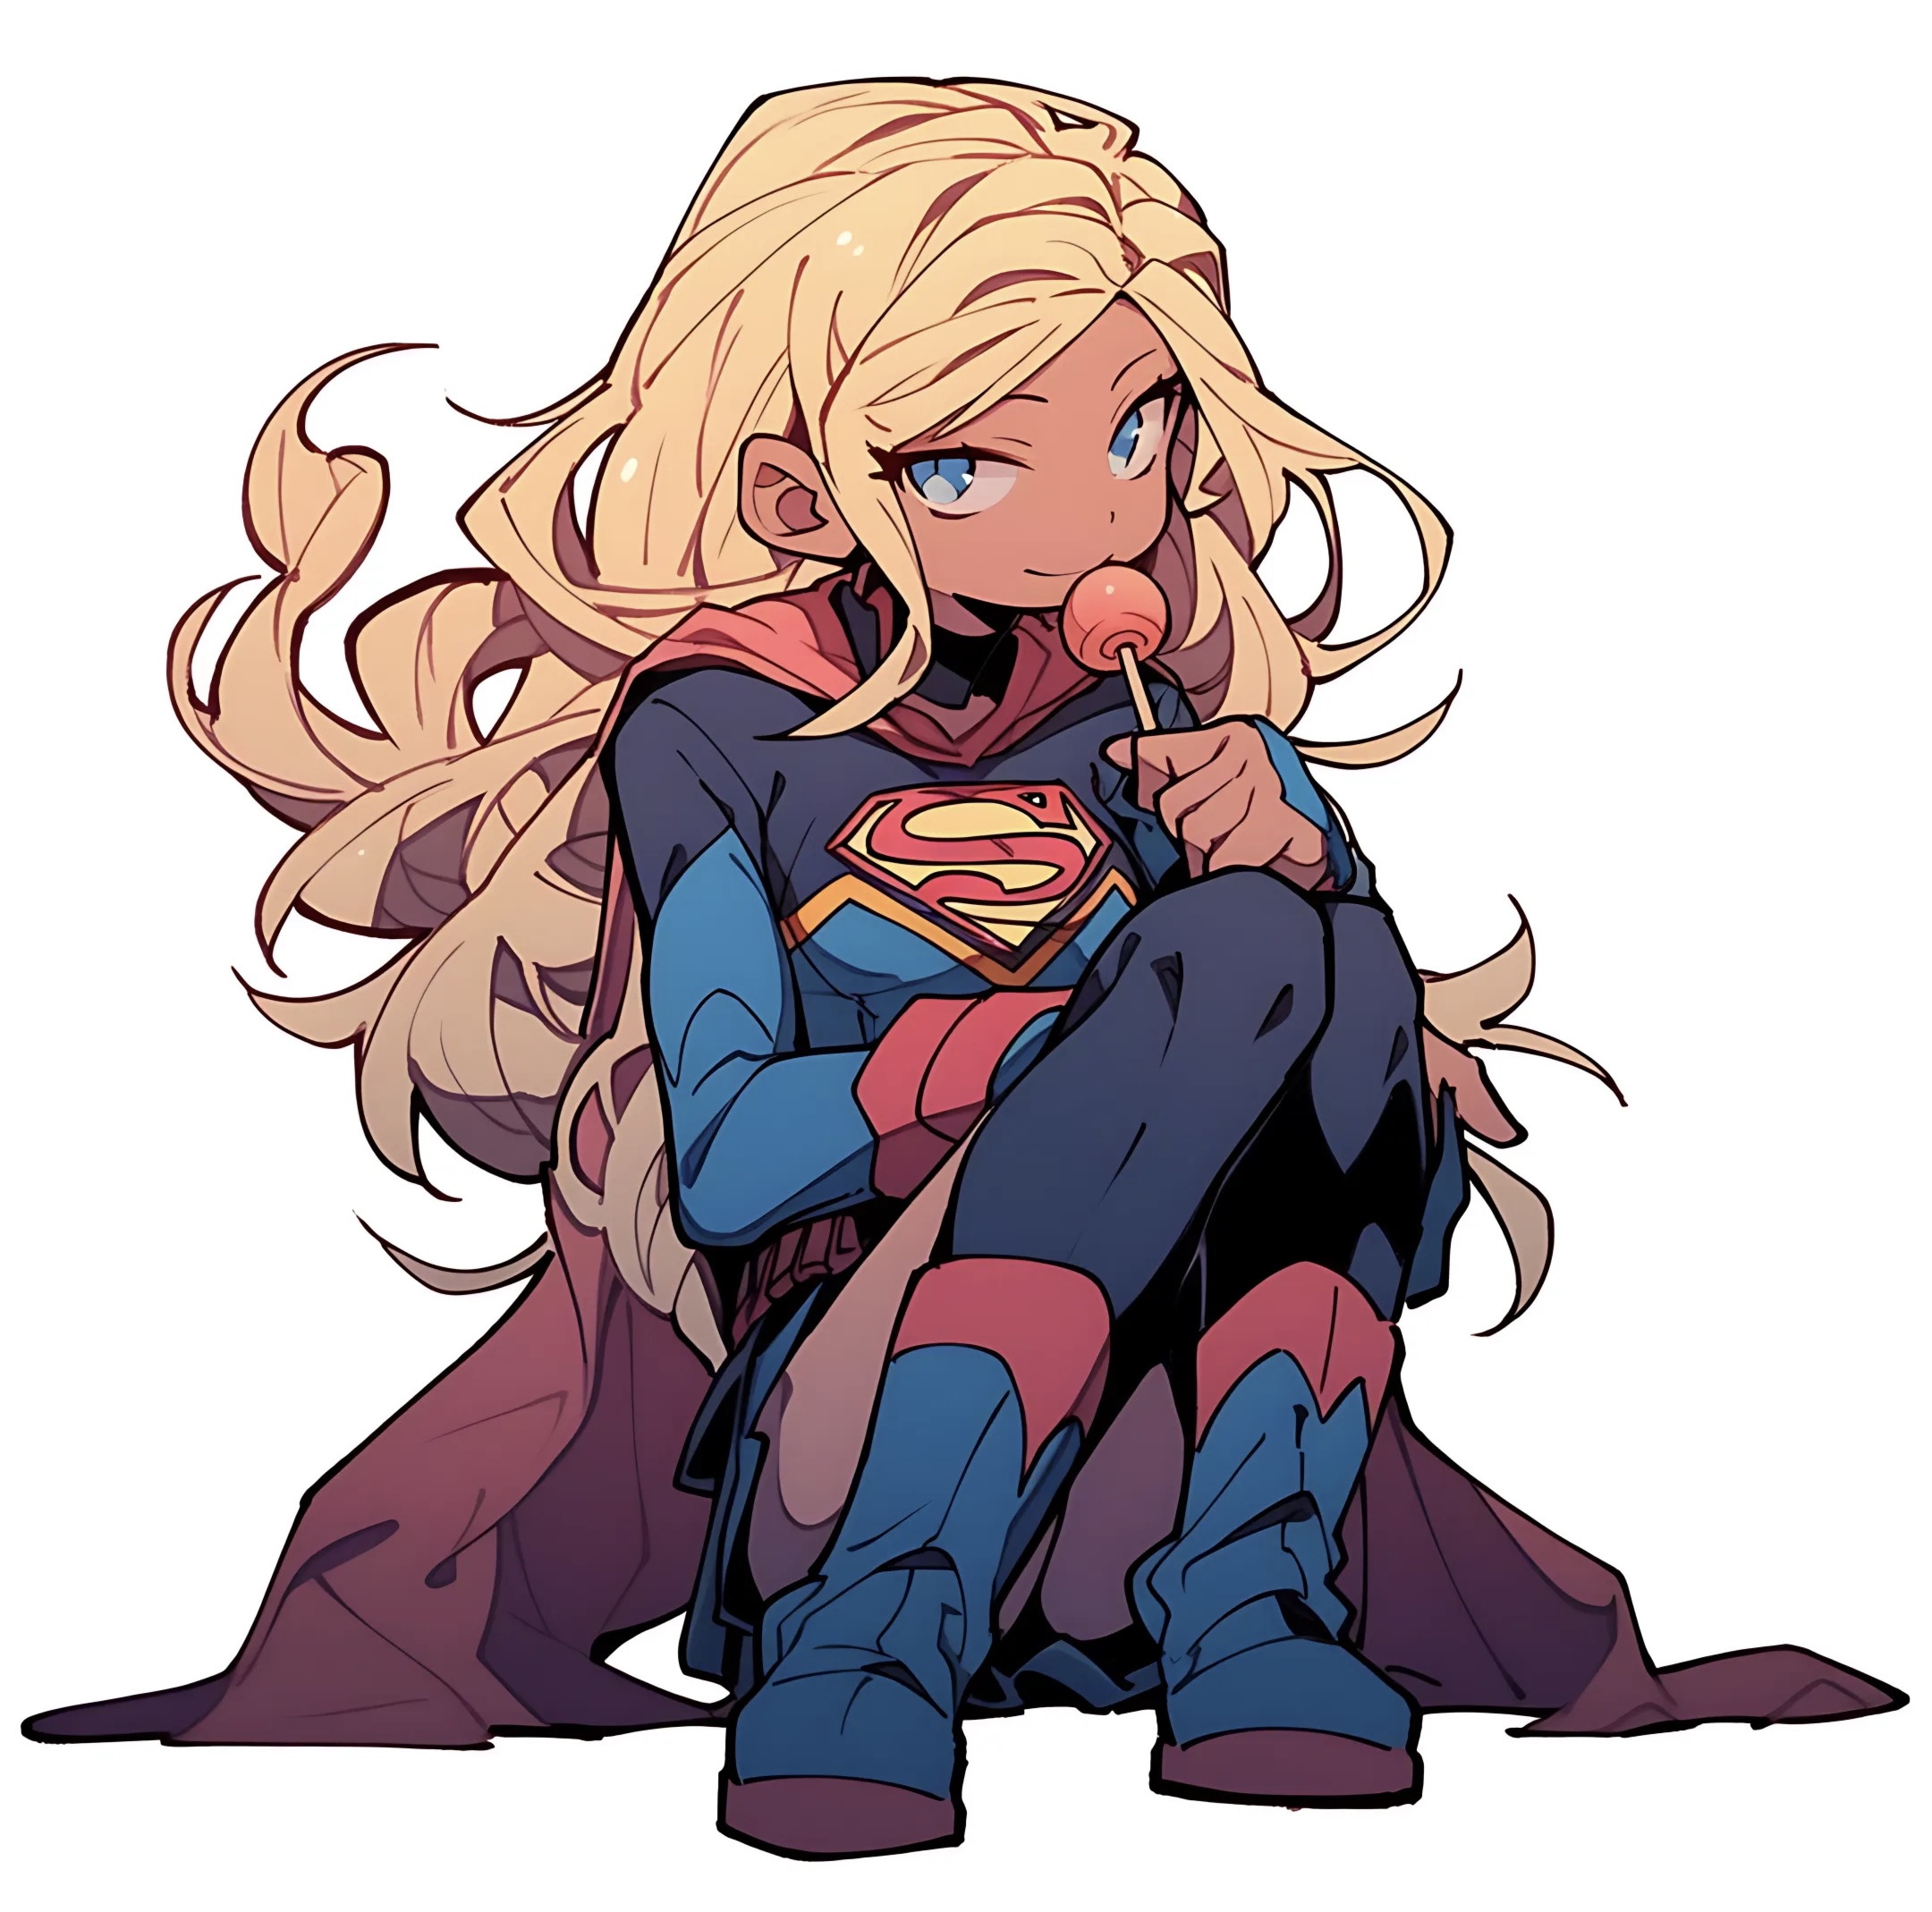 Supergirl Anime by kragf on DeviantArt